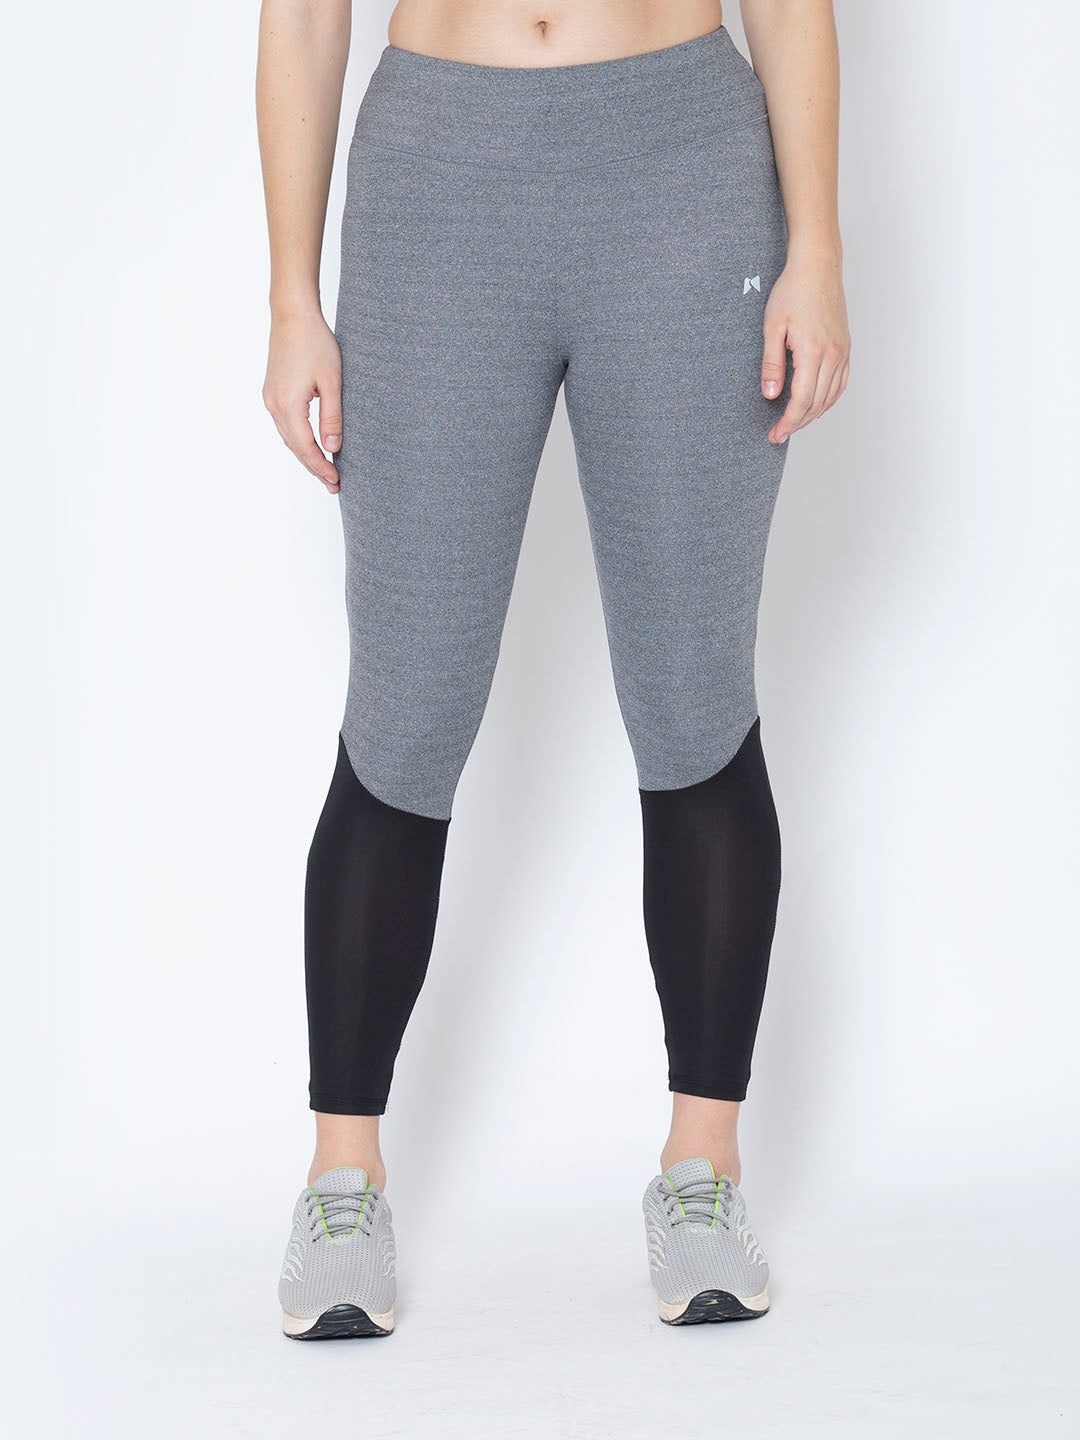 Pair of Medium Waist Tight & Front Zip Sports Bra – Grey